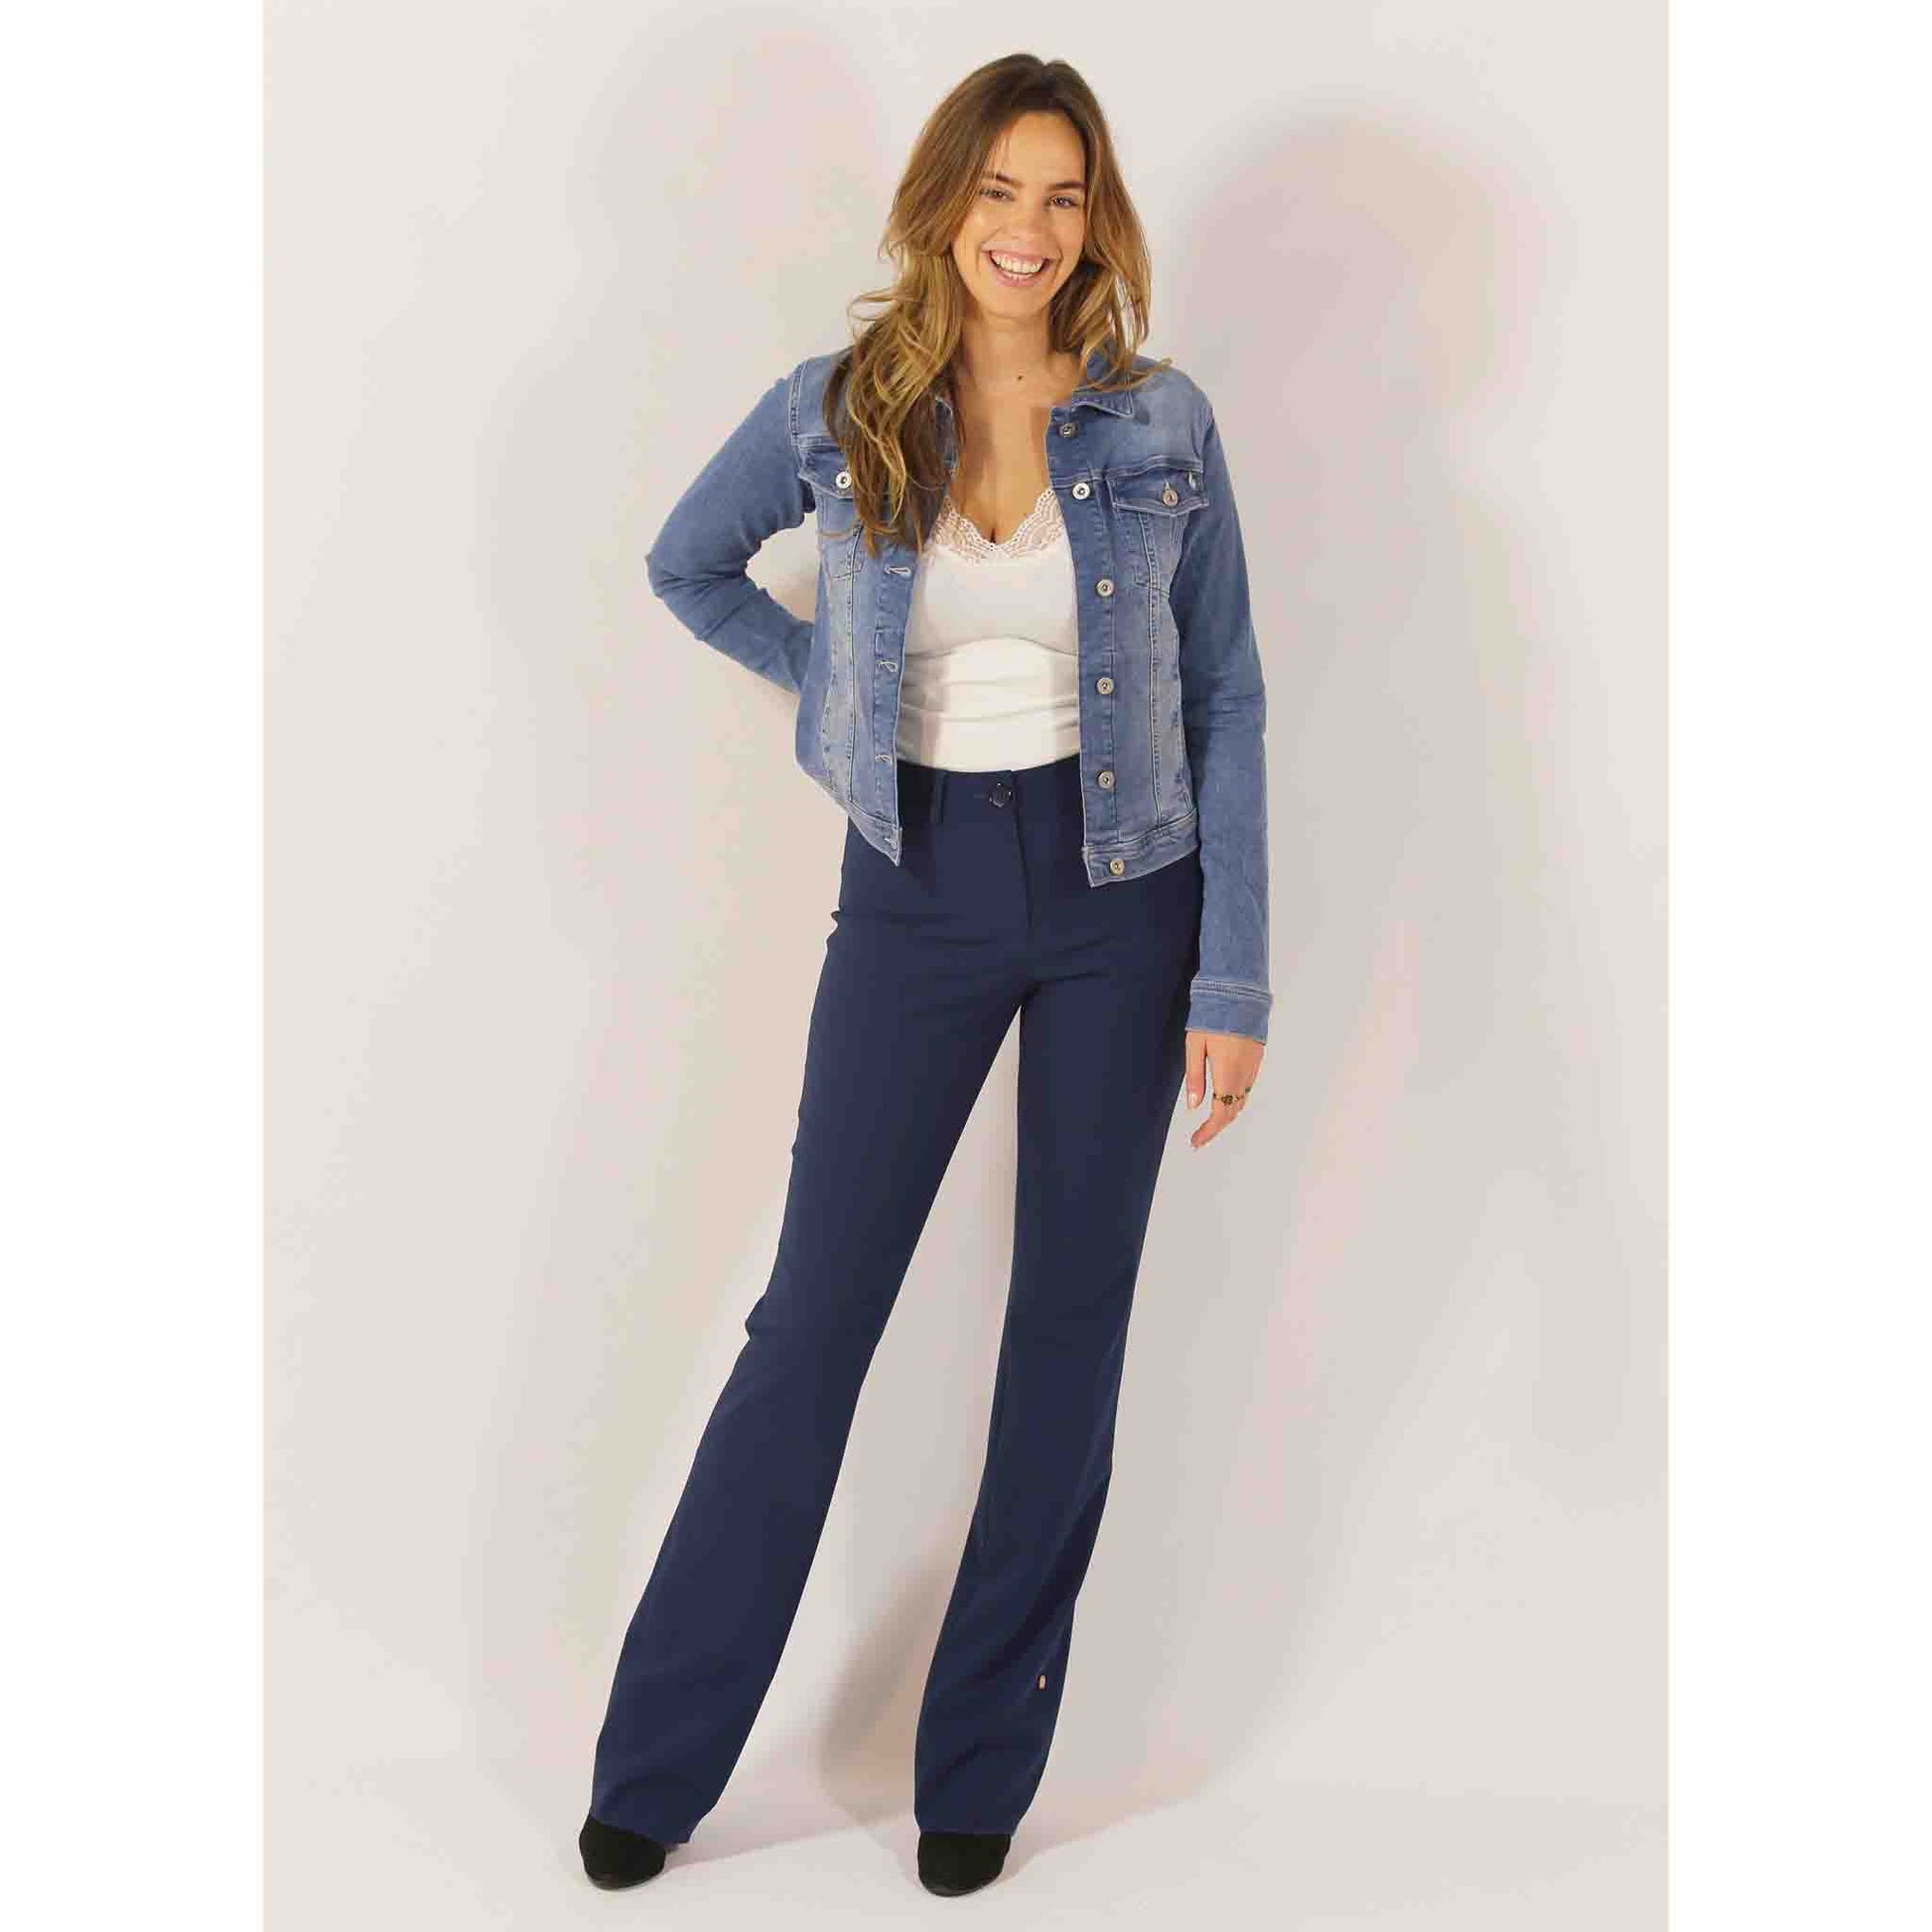 kleding lange vrouwen bluefire jeans jack pacific